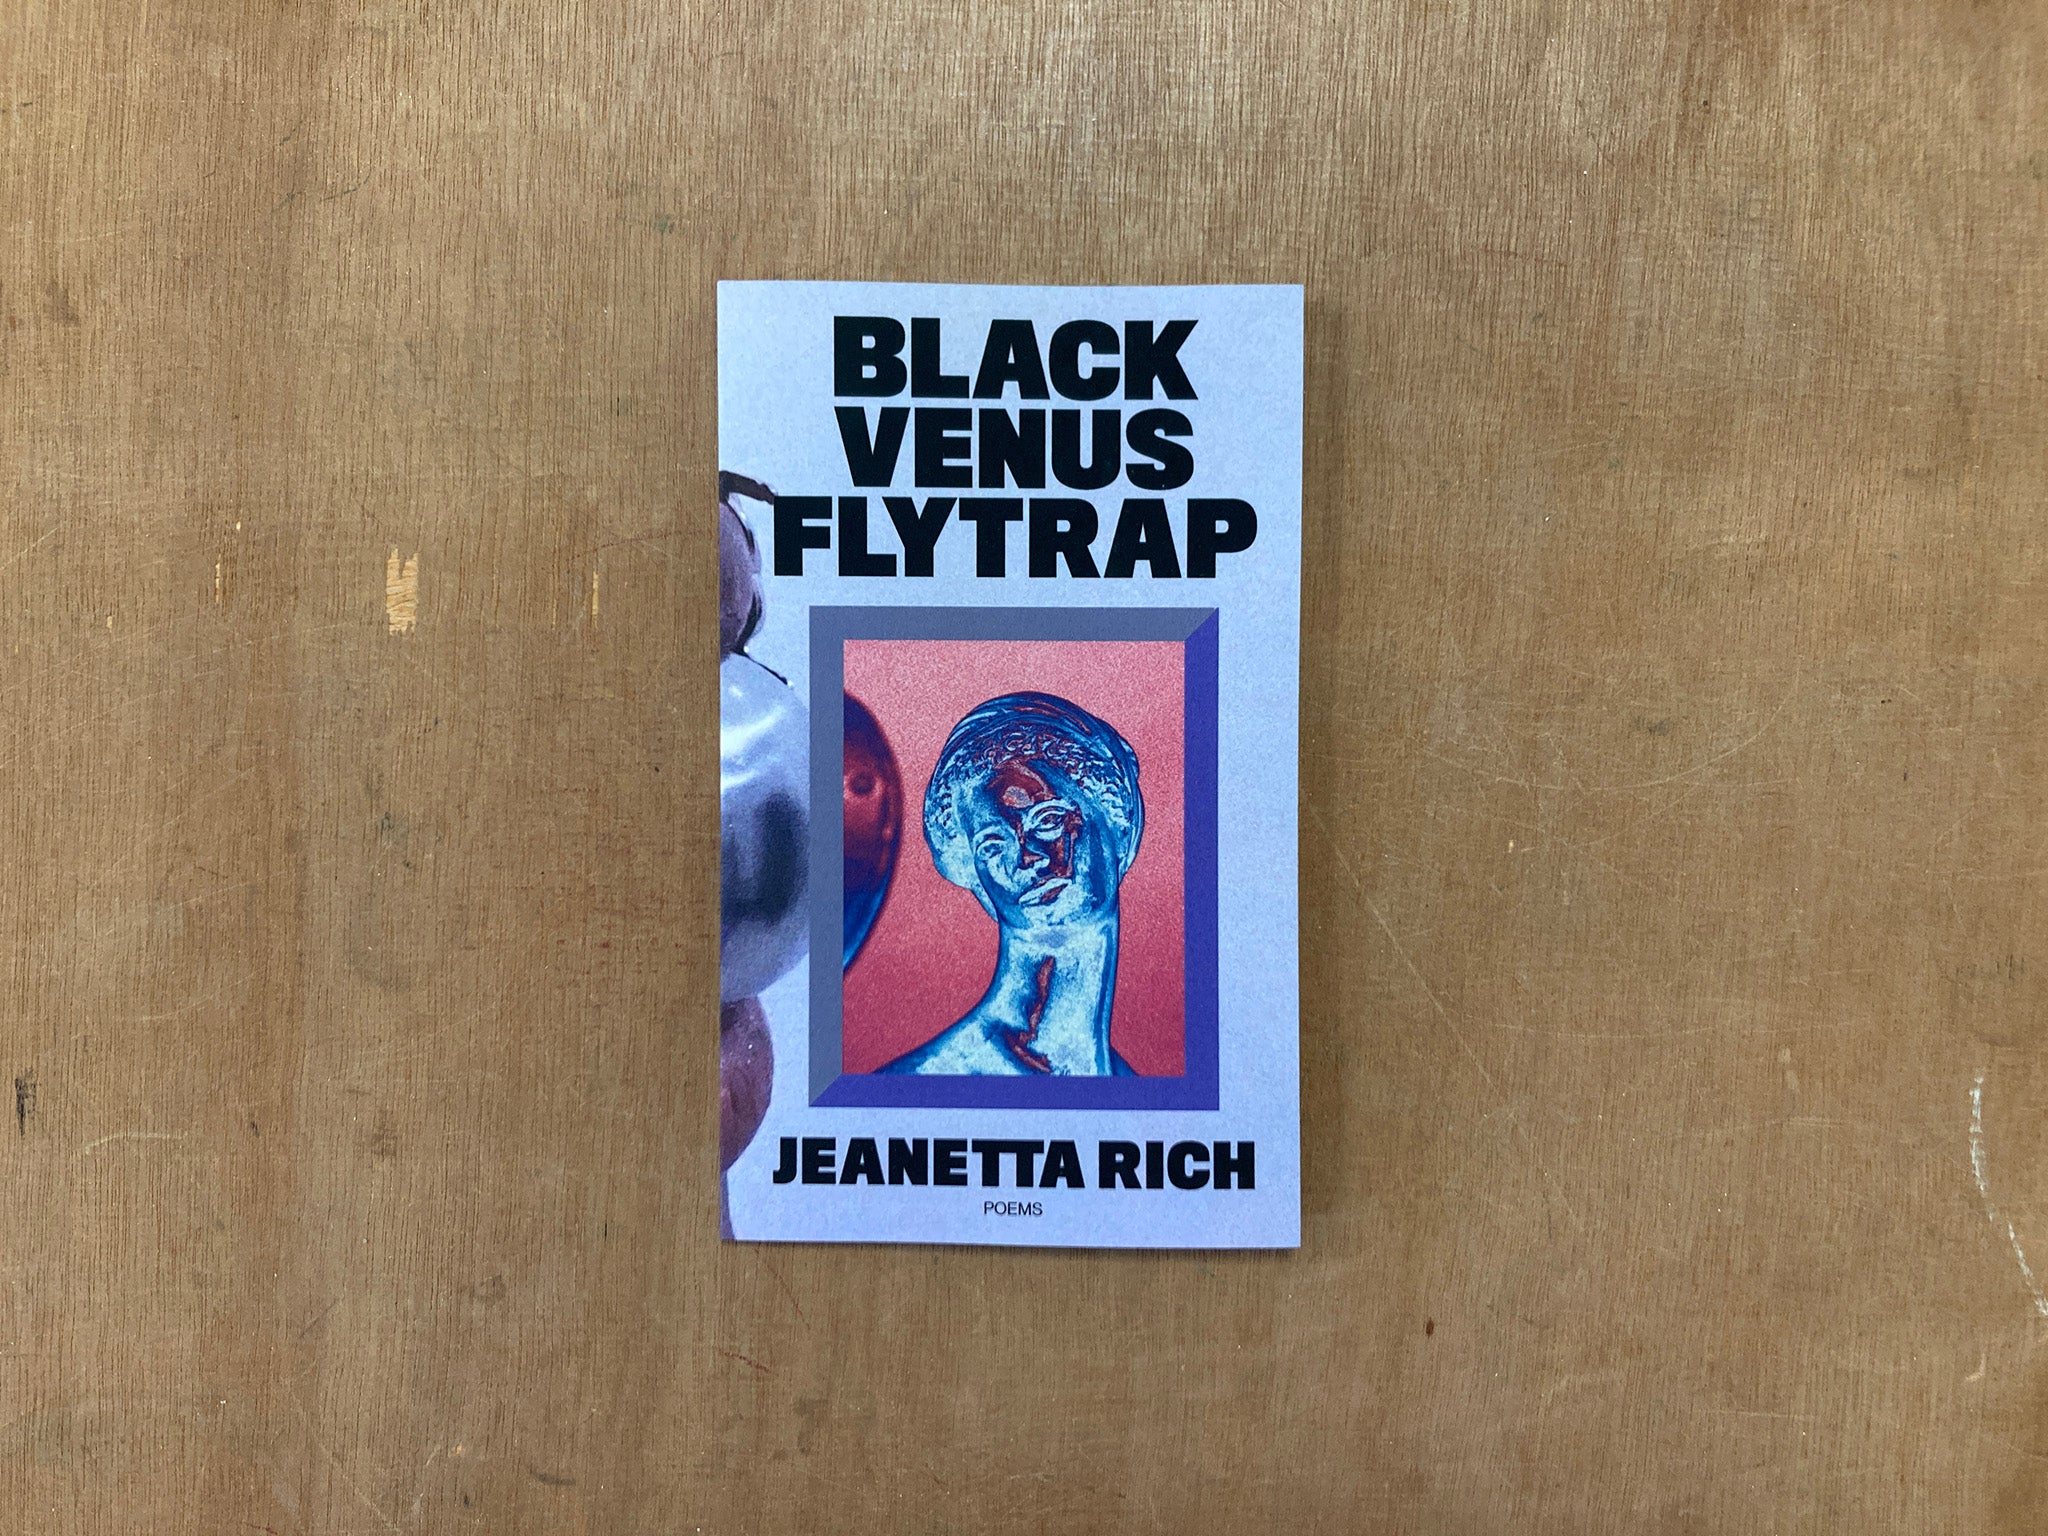 BLACK VENUS FLY TRAP by Jeanetta Rich